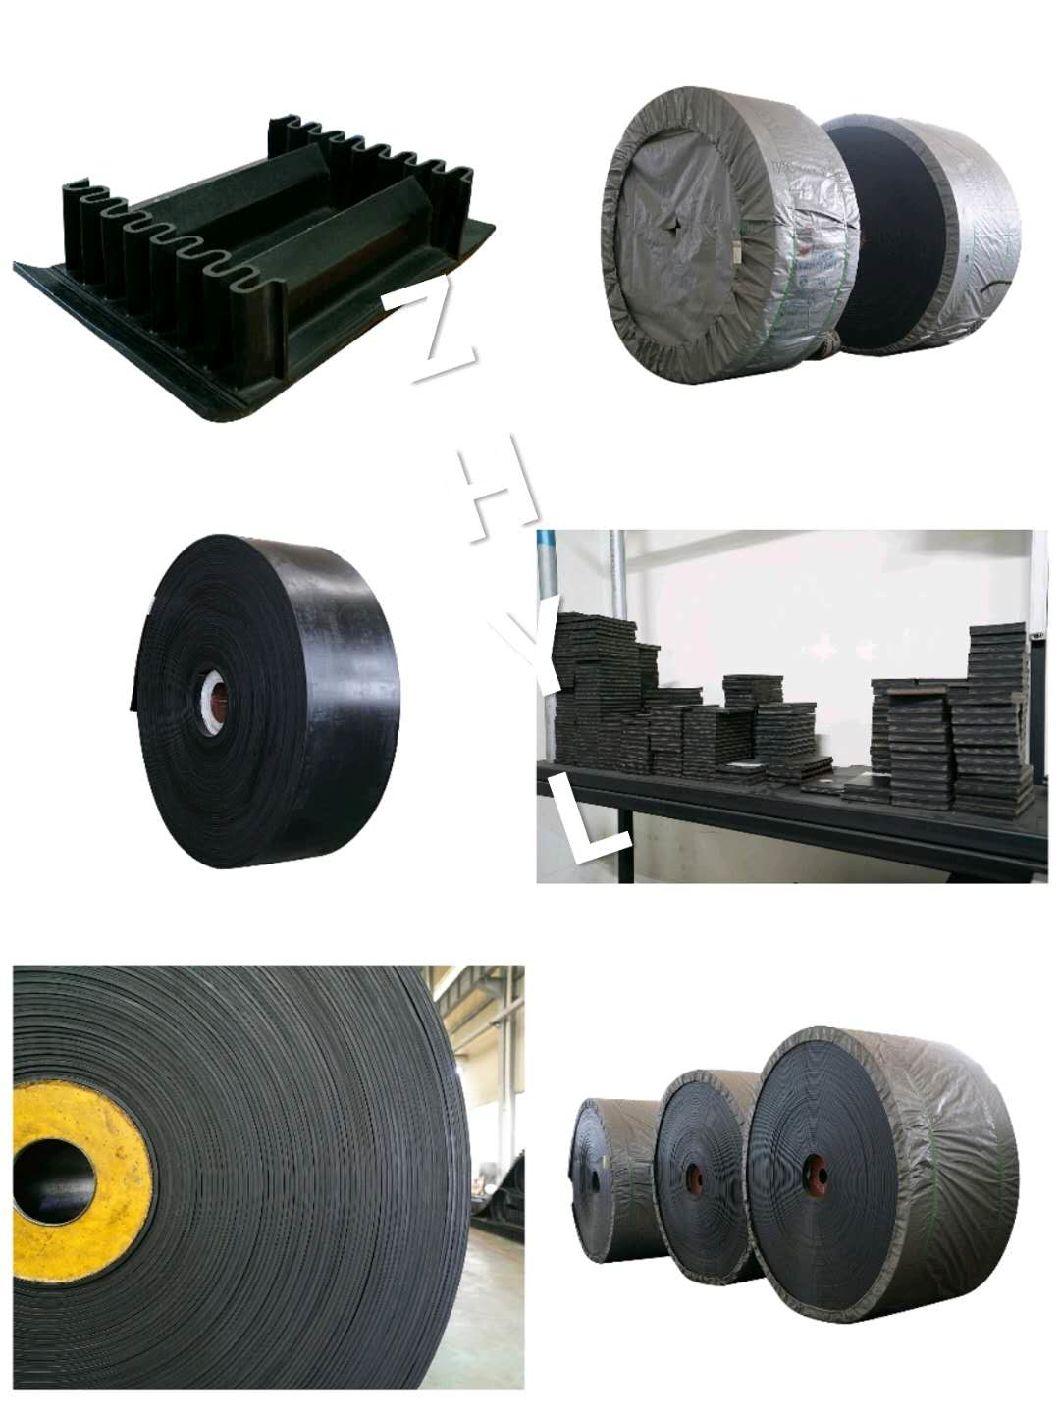 Pure Nylon Carcass Steel Reinforced Conveyor Belt for Sand/Coal/Ore Plant